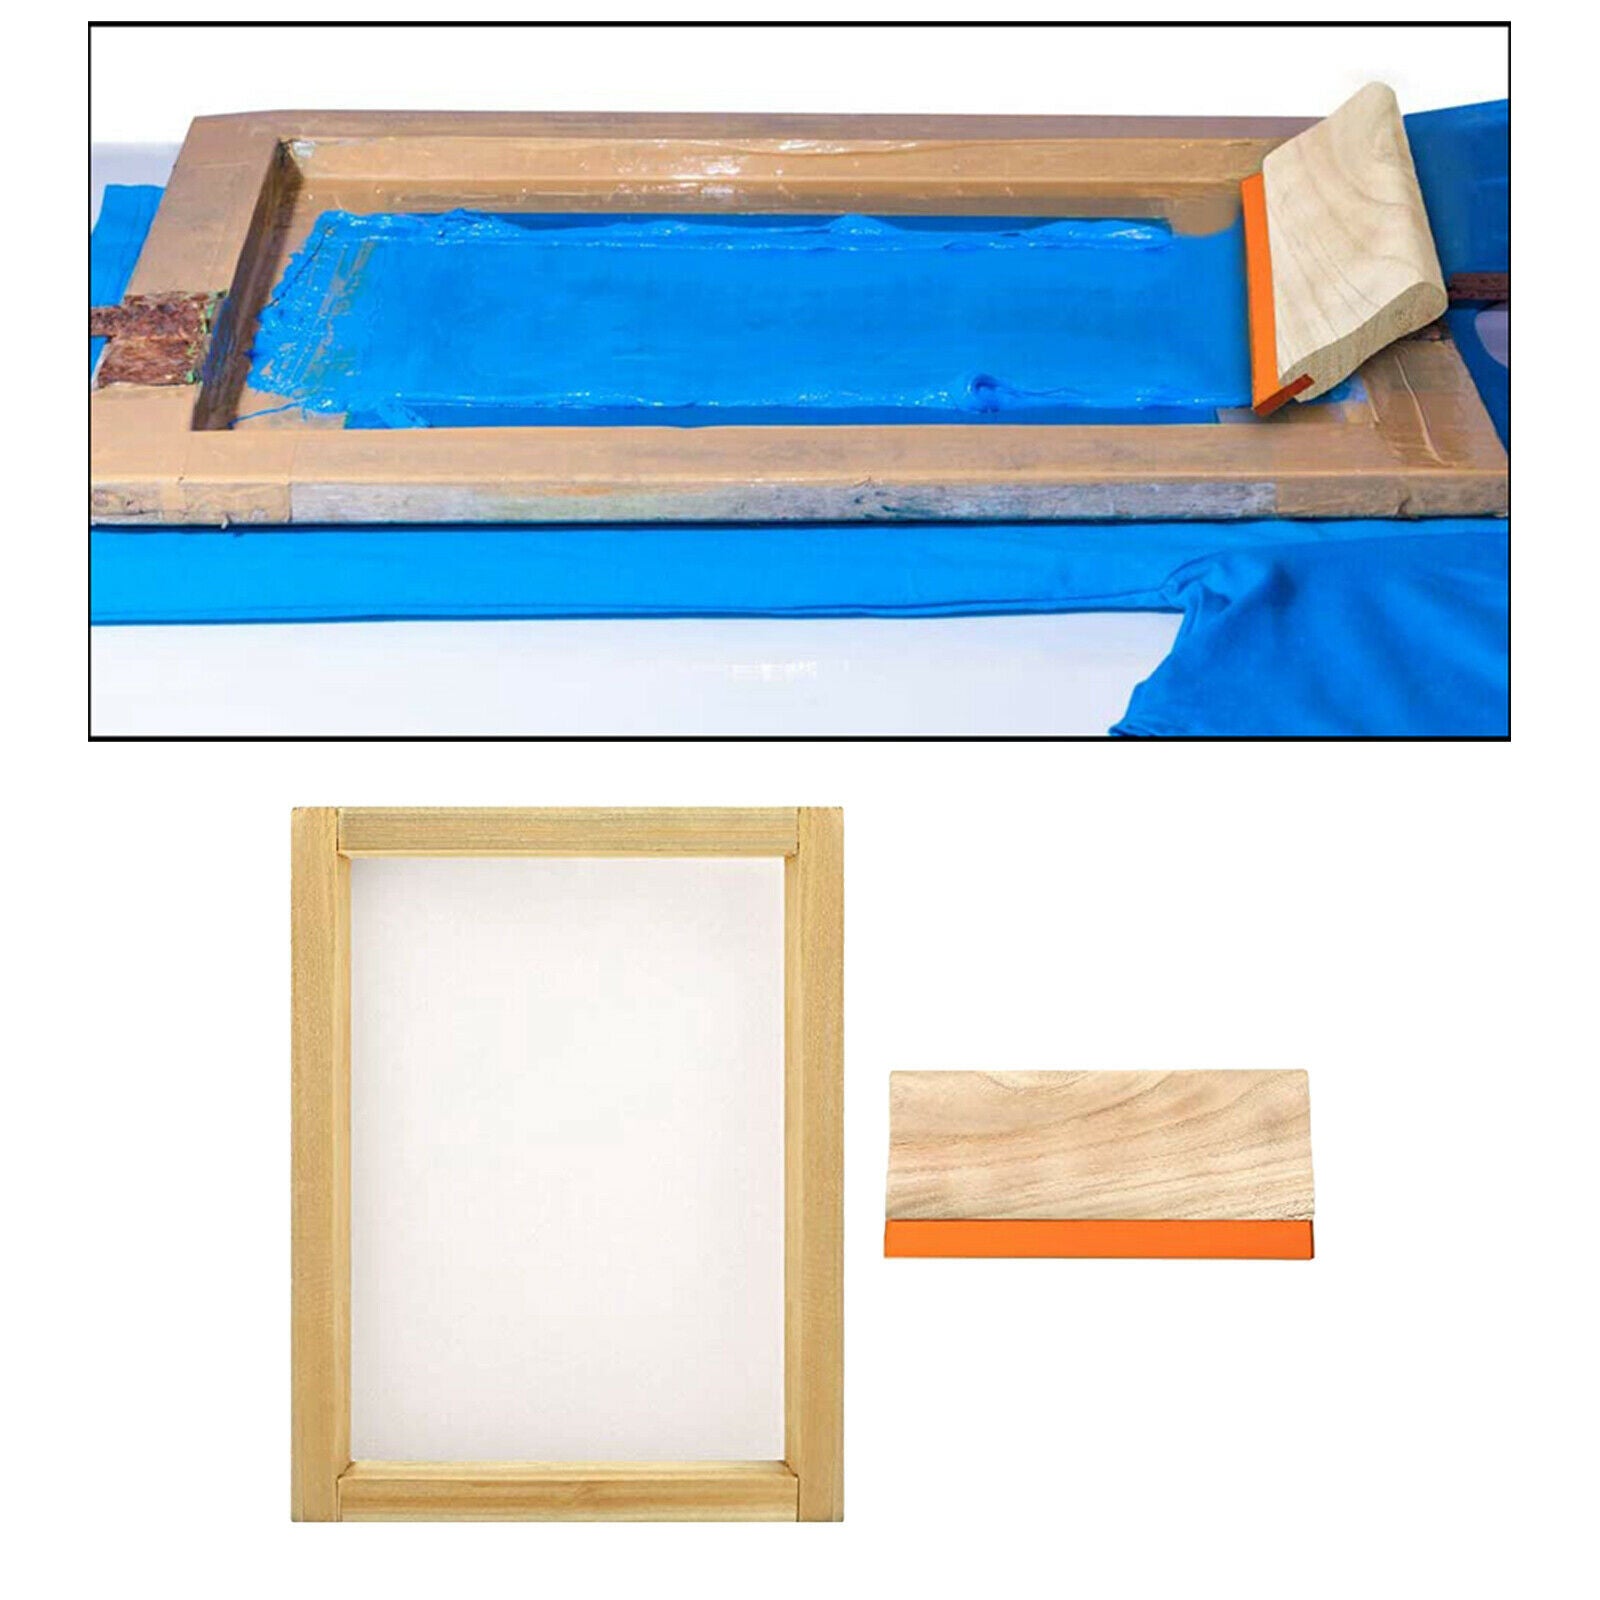 10x14inch Large Wood Silk Screen Printing Frame w/ Screen Printing Squeegee